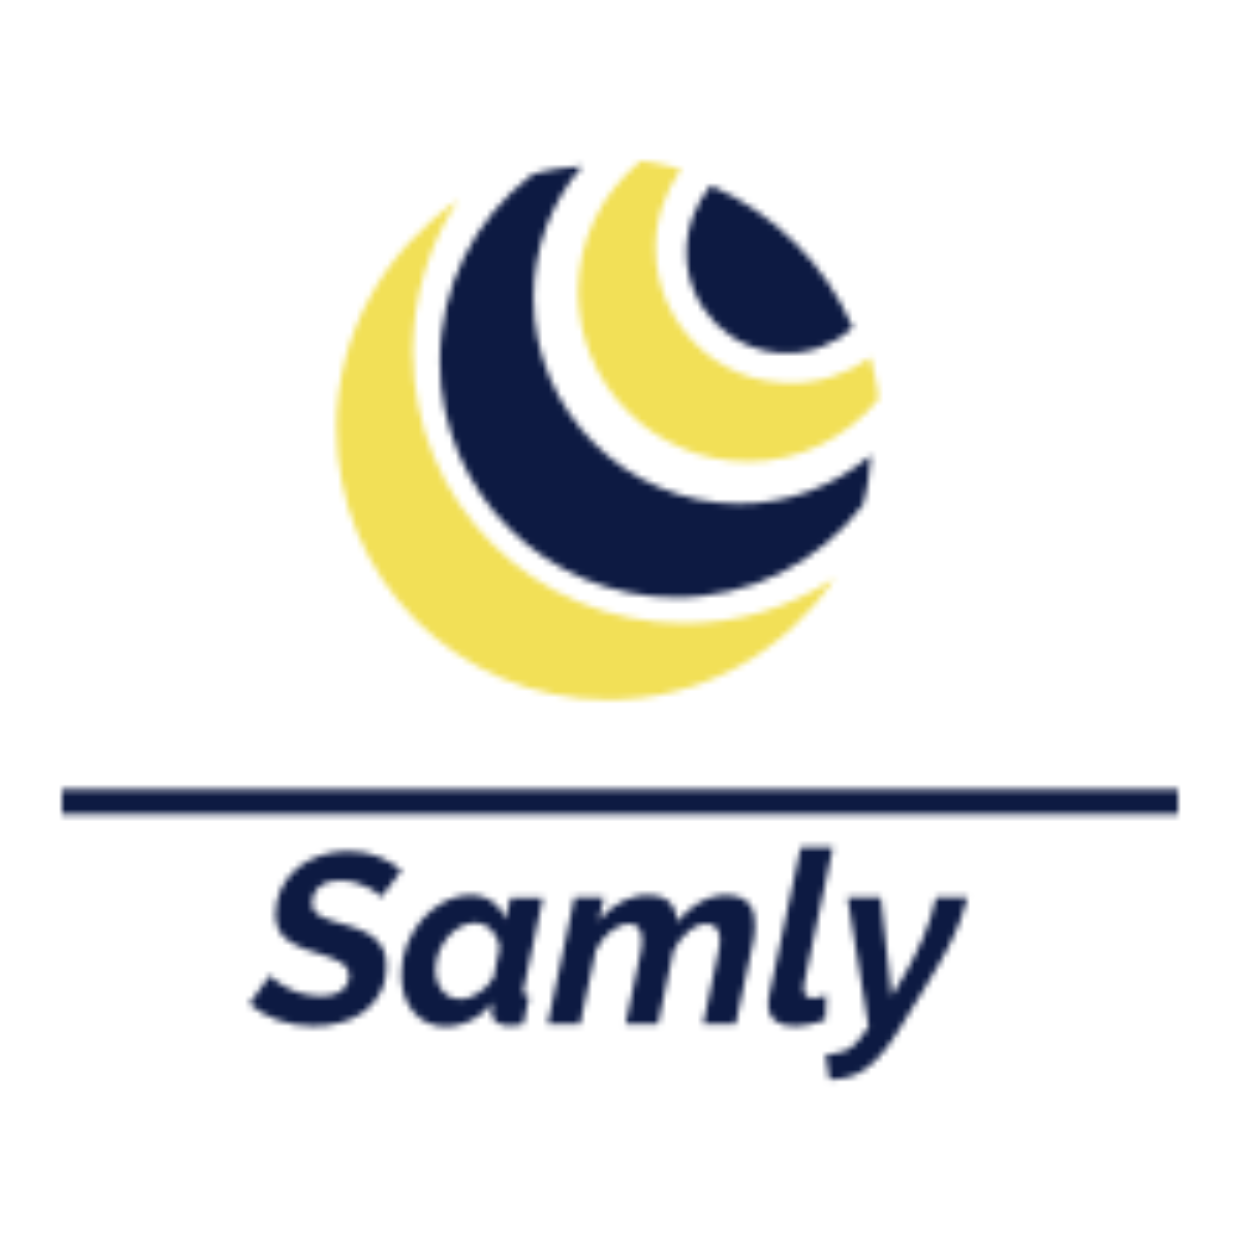 Samly logo